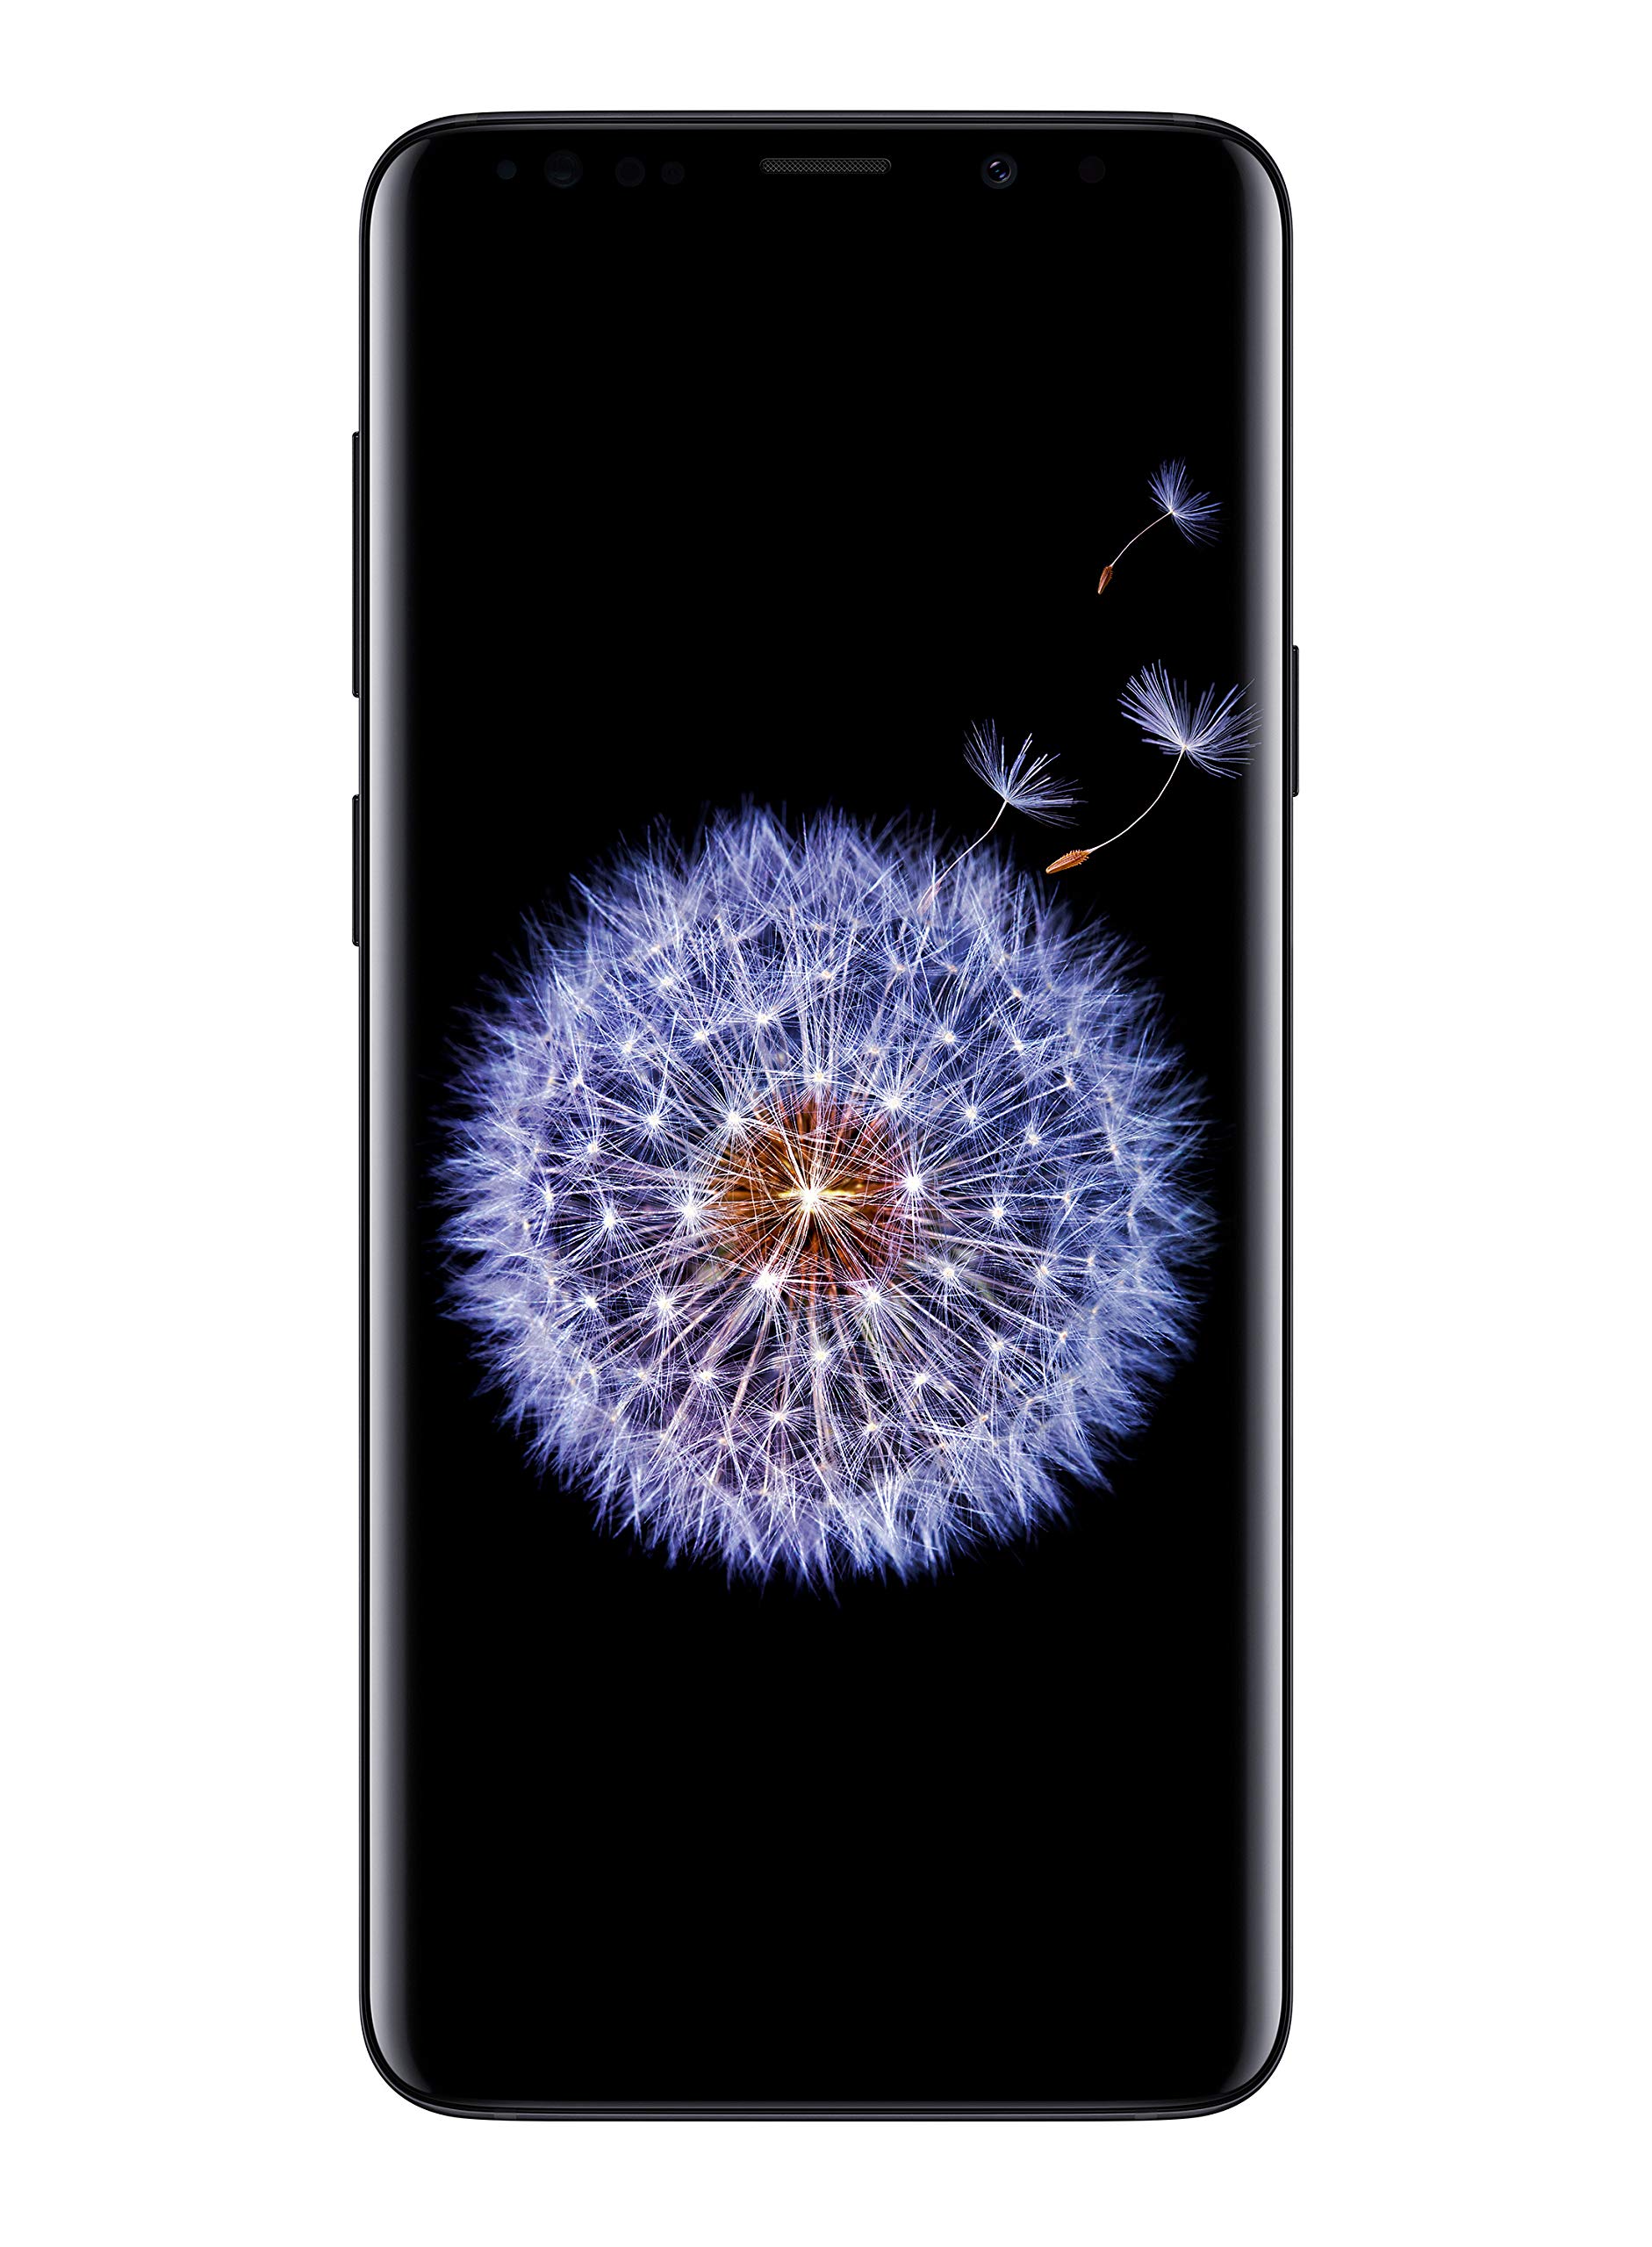 Samsung Galaxy S9+, 64GB, Midnight Black - Fully Unlocked (Renewed)